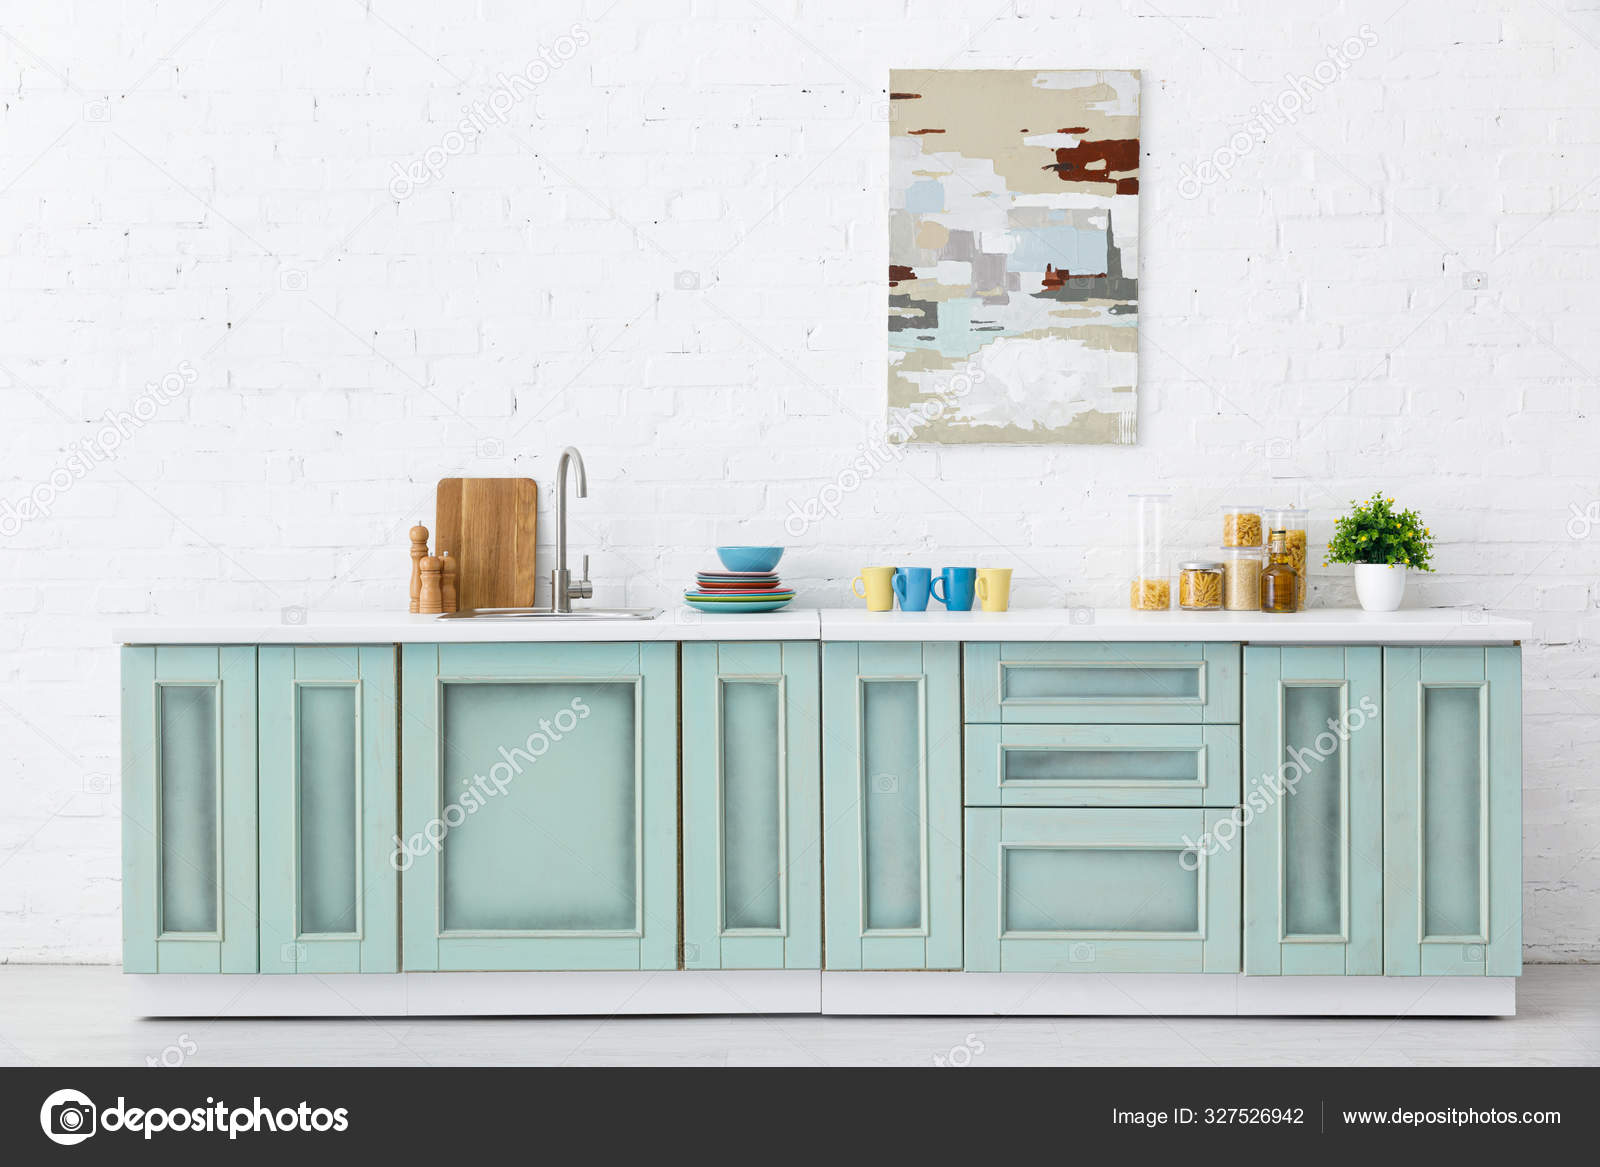 White Turquoise Kitchen Interior Kitchenware Abstract